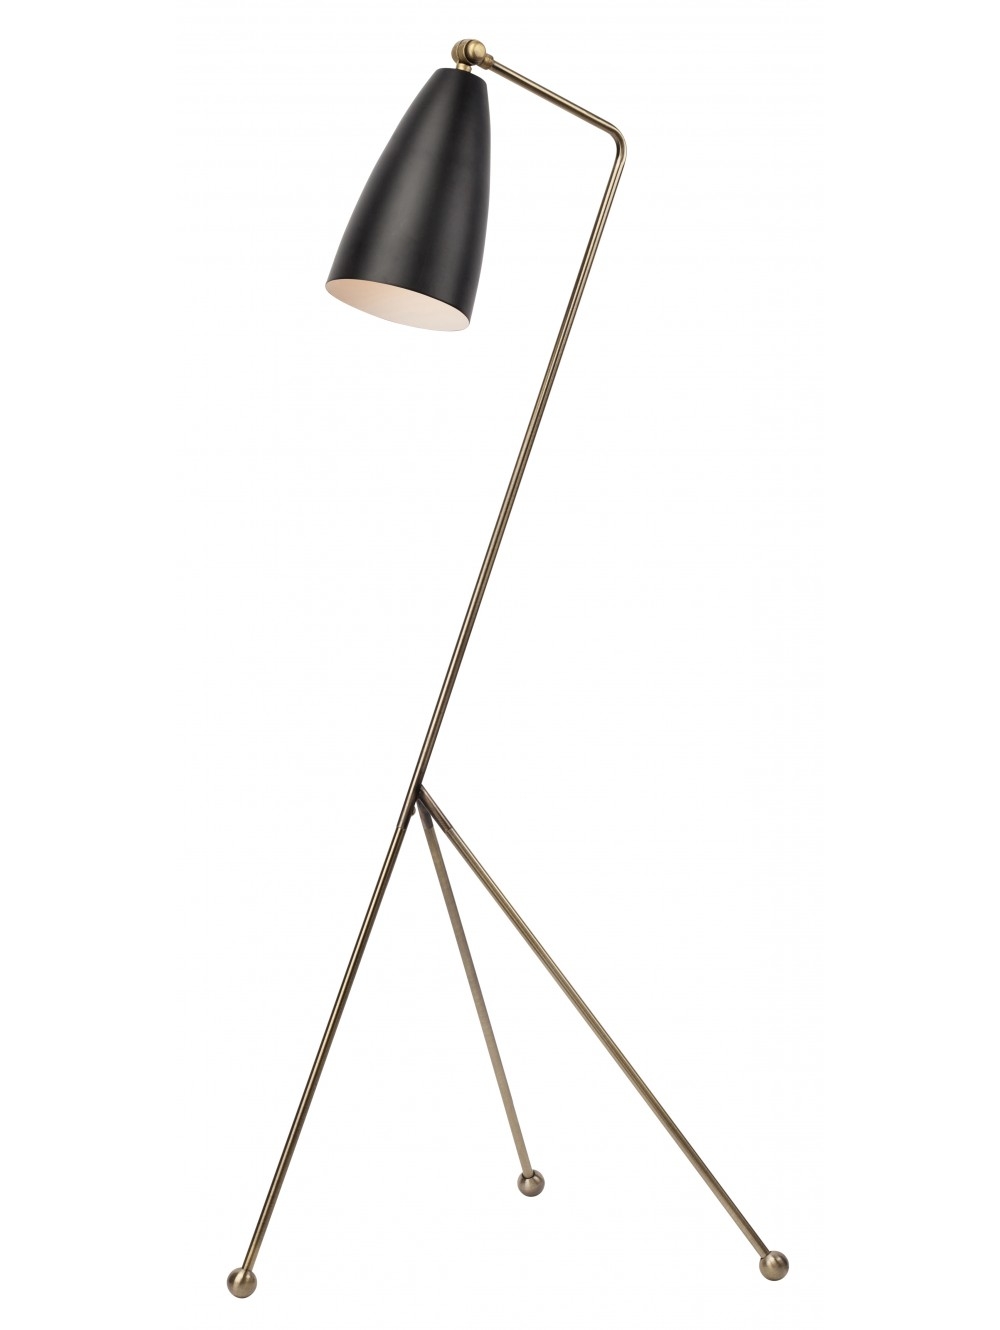 Shany Matte Black and Brass Floor Lamp - Image 2